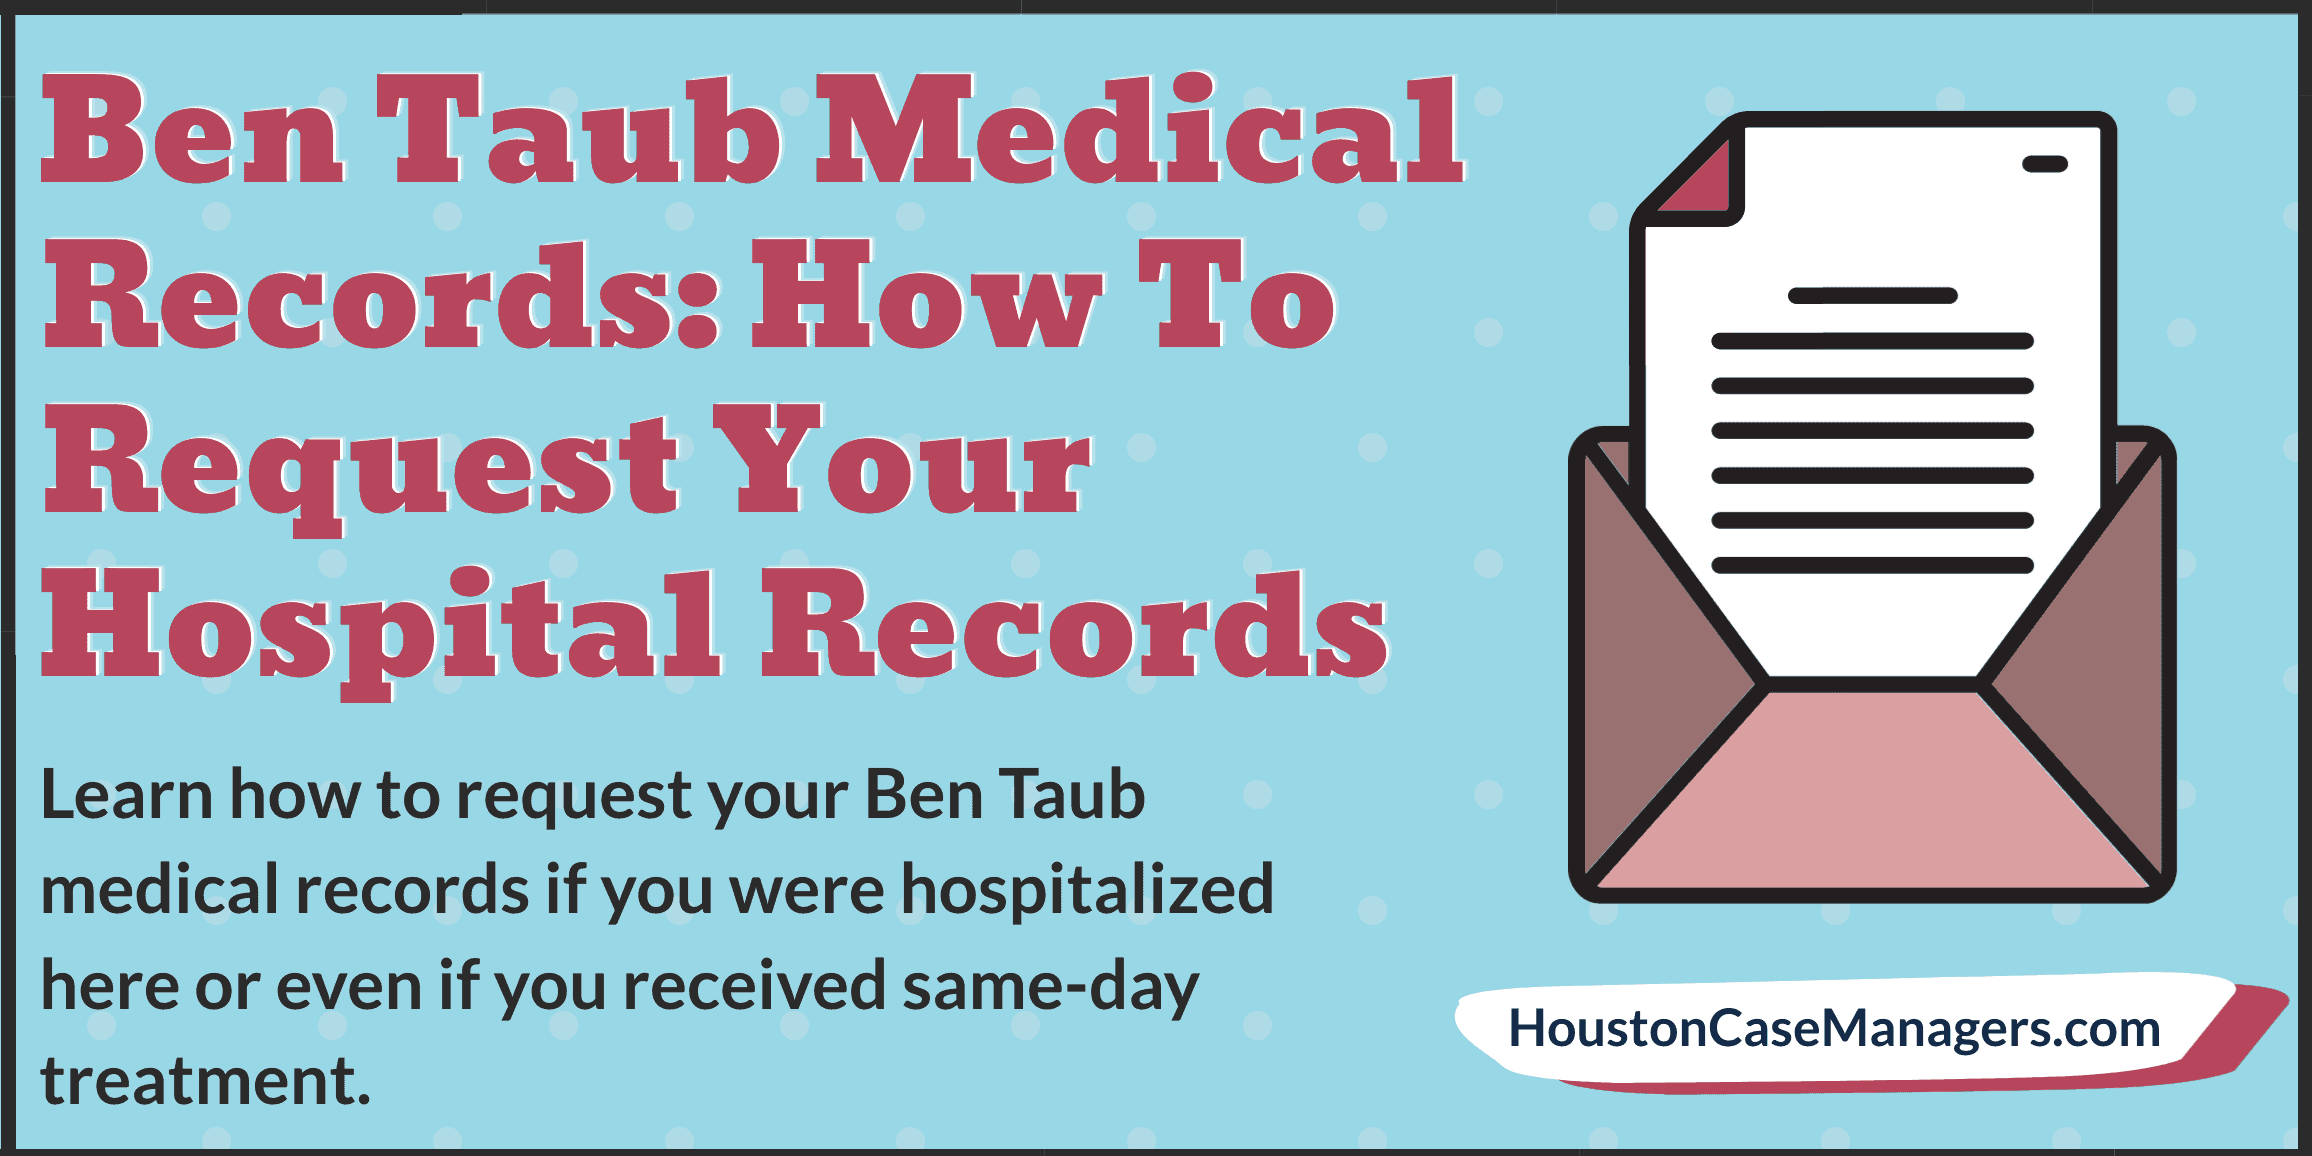 Ben Taub medical records